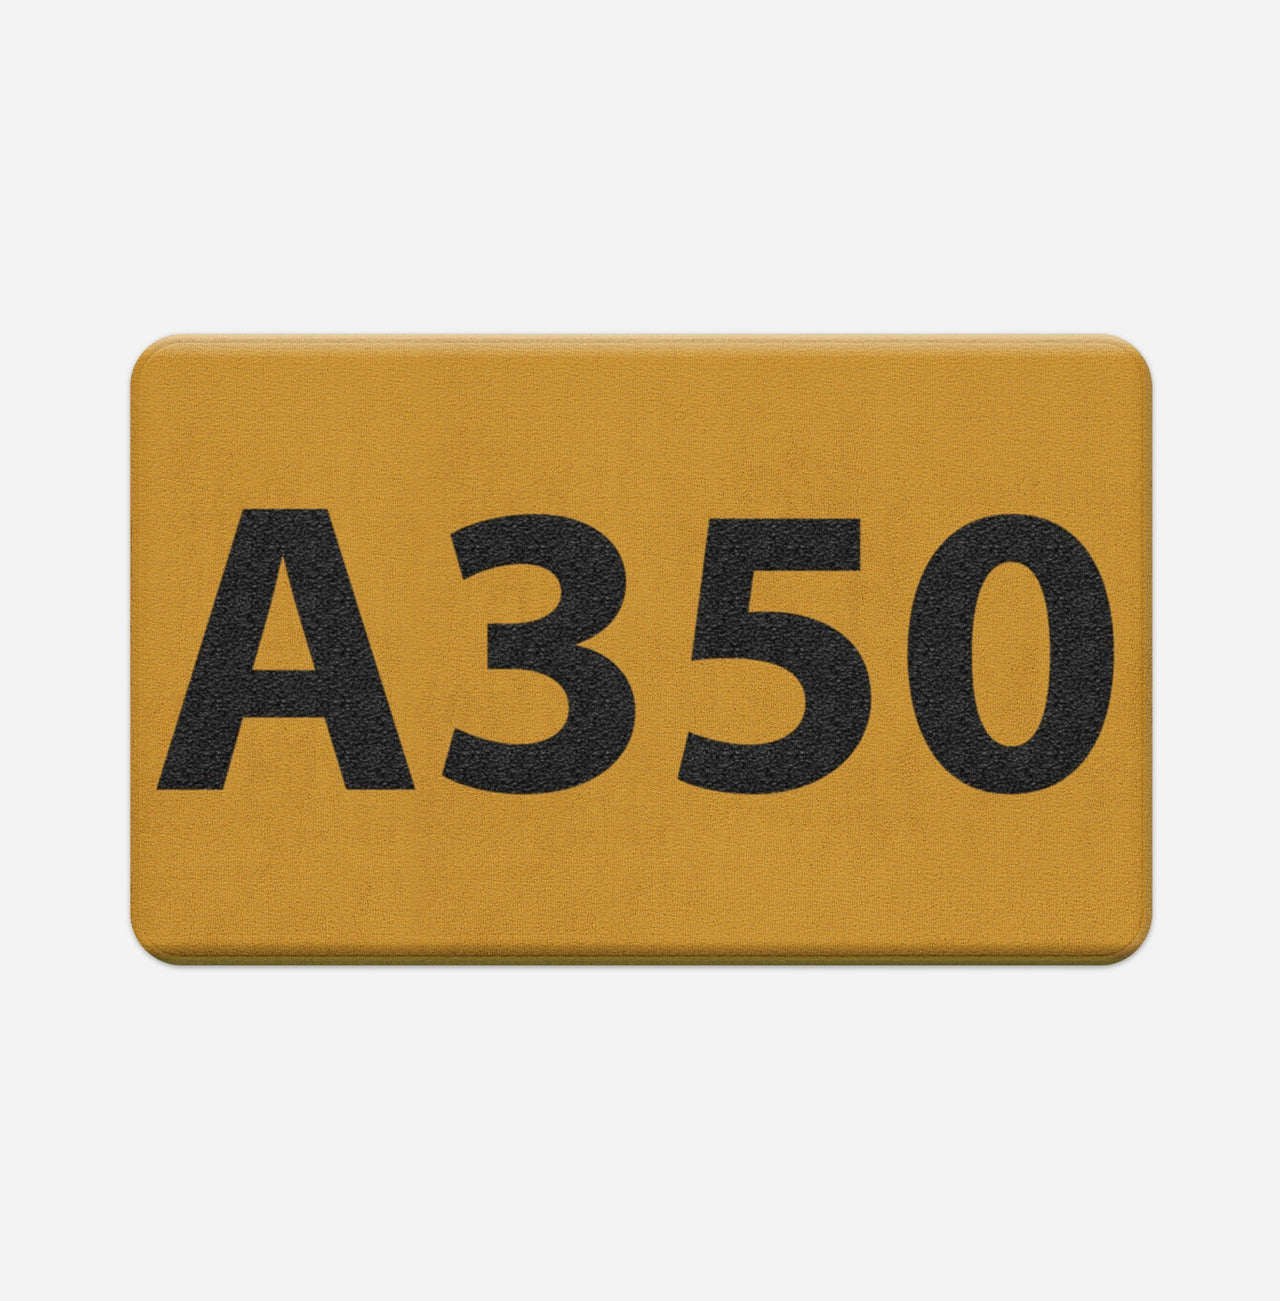 Airport Ground Signs Designed "Airbus A350" Bath Mats Pilot Eyes Store Floor Mat 50x80cm 